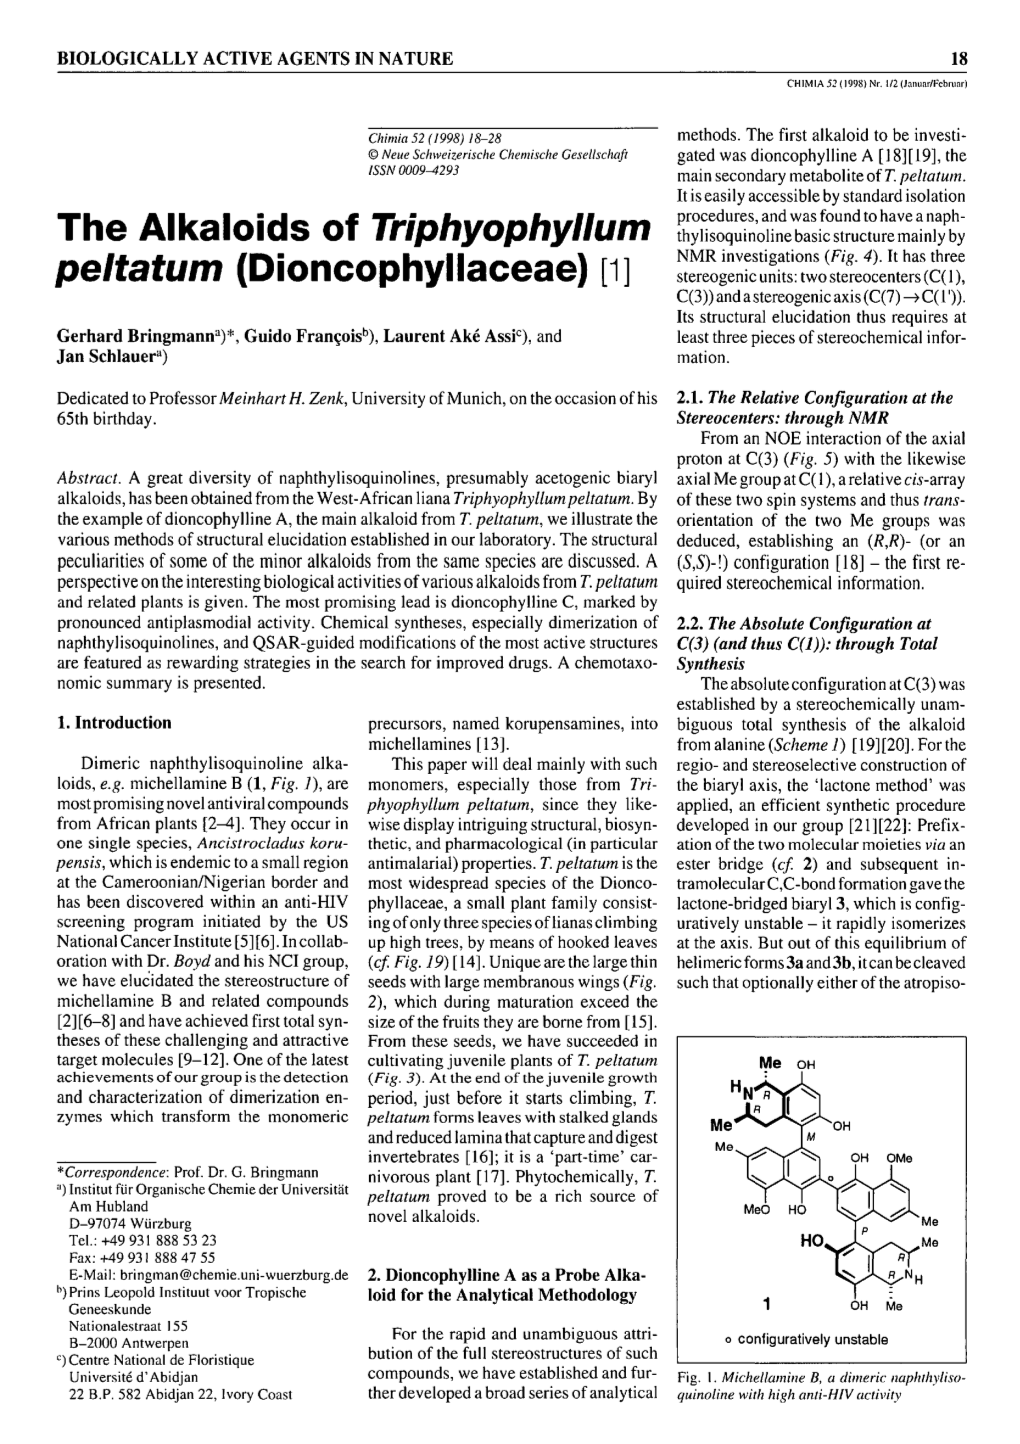 The Alkaloids of &lt;I&gt;Triphyophyllum Peltatum&lt;/I&gt; (Dioncophyllaceae)